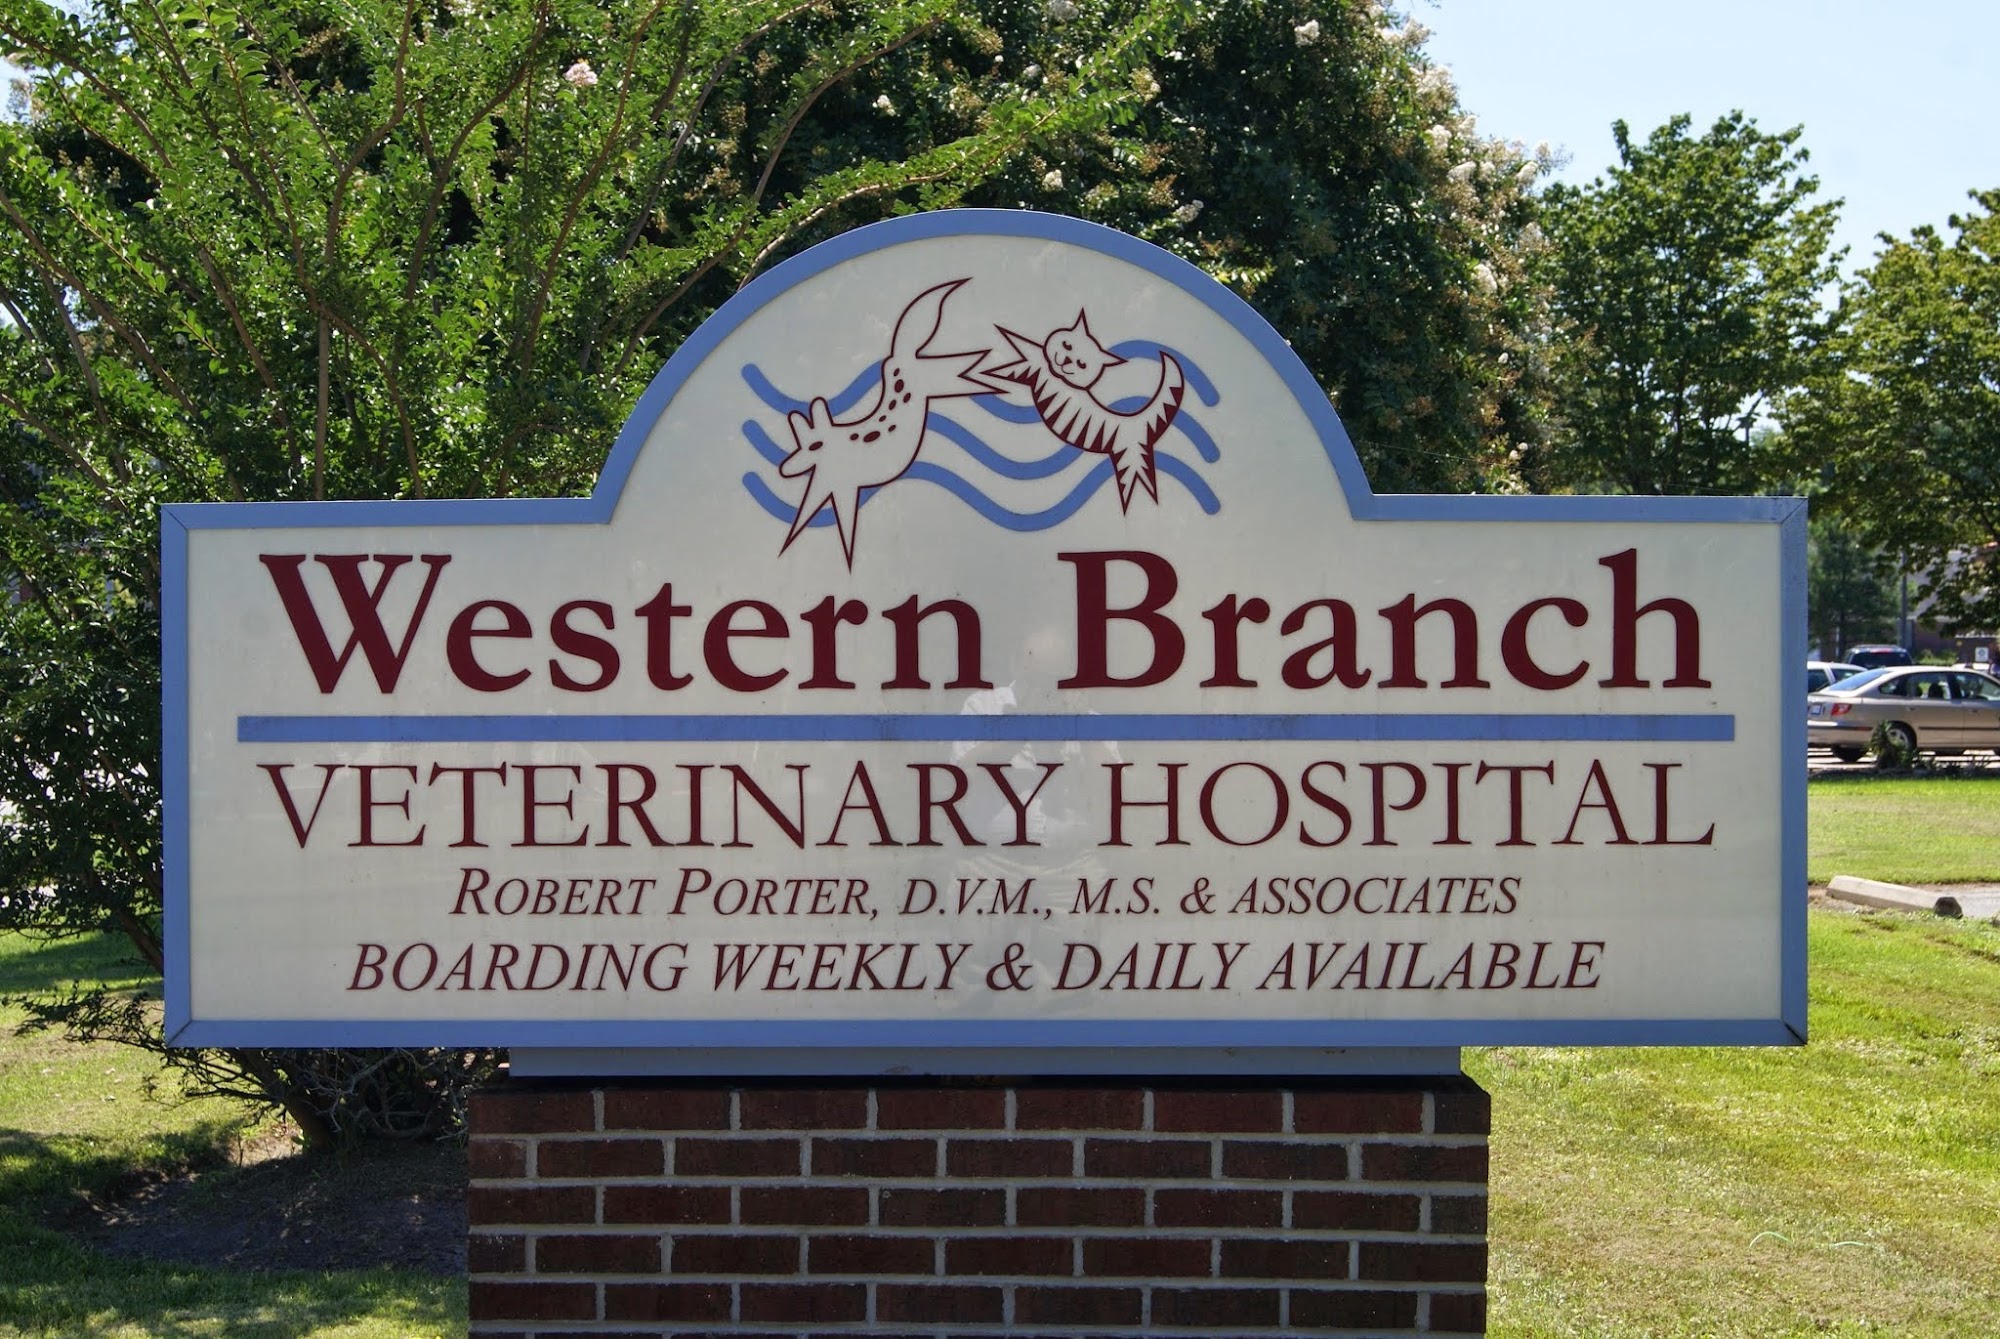 Western Branch Veterinary Hospital